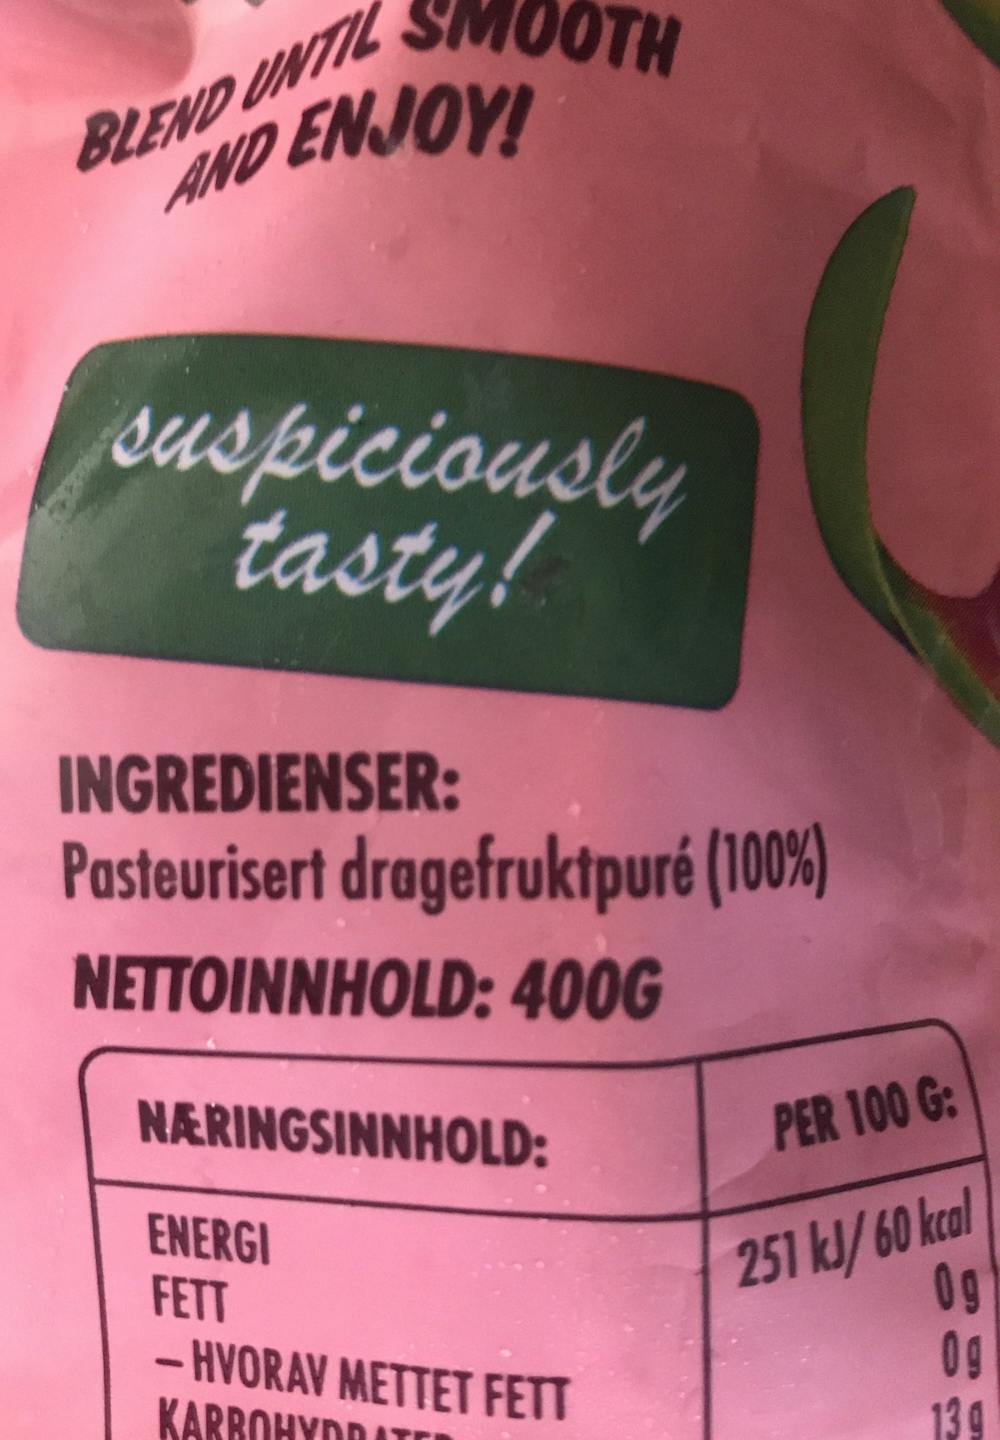 Ingredienslisten til 100% dragonfruit smoothie pack, Smoothie exchange